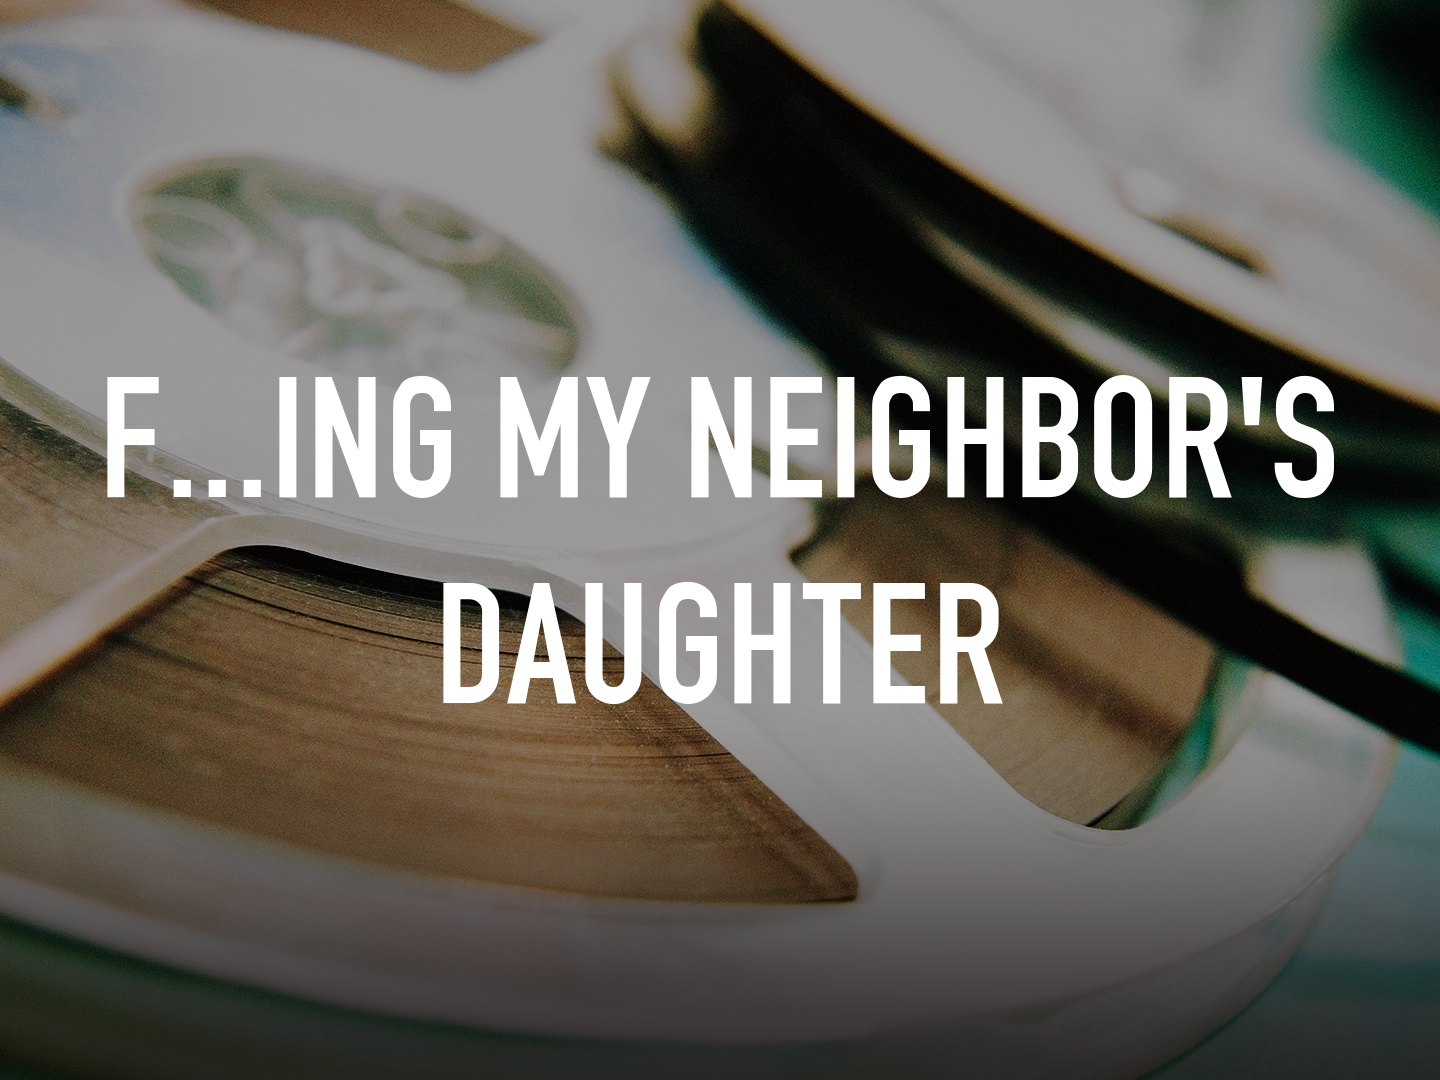 Neighbor's Daughter